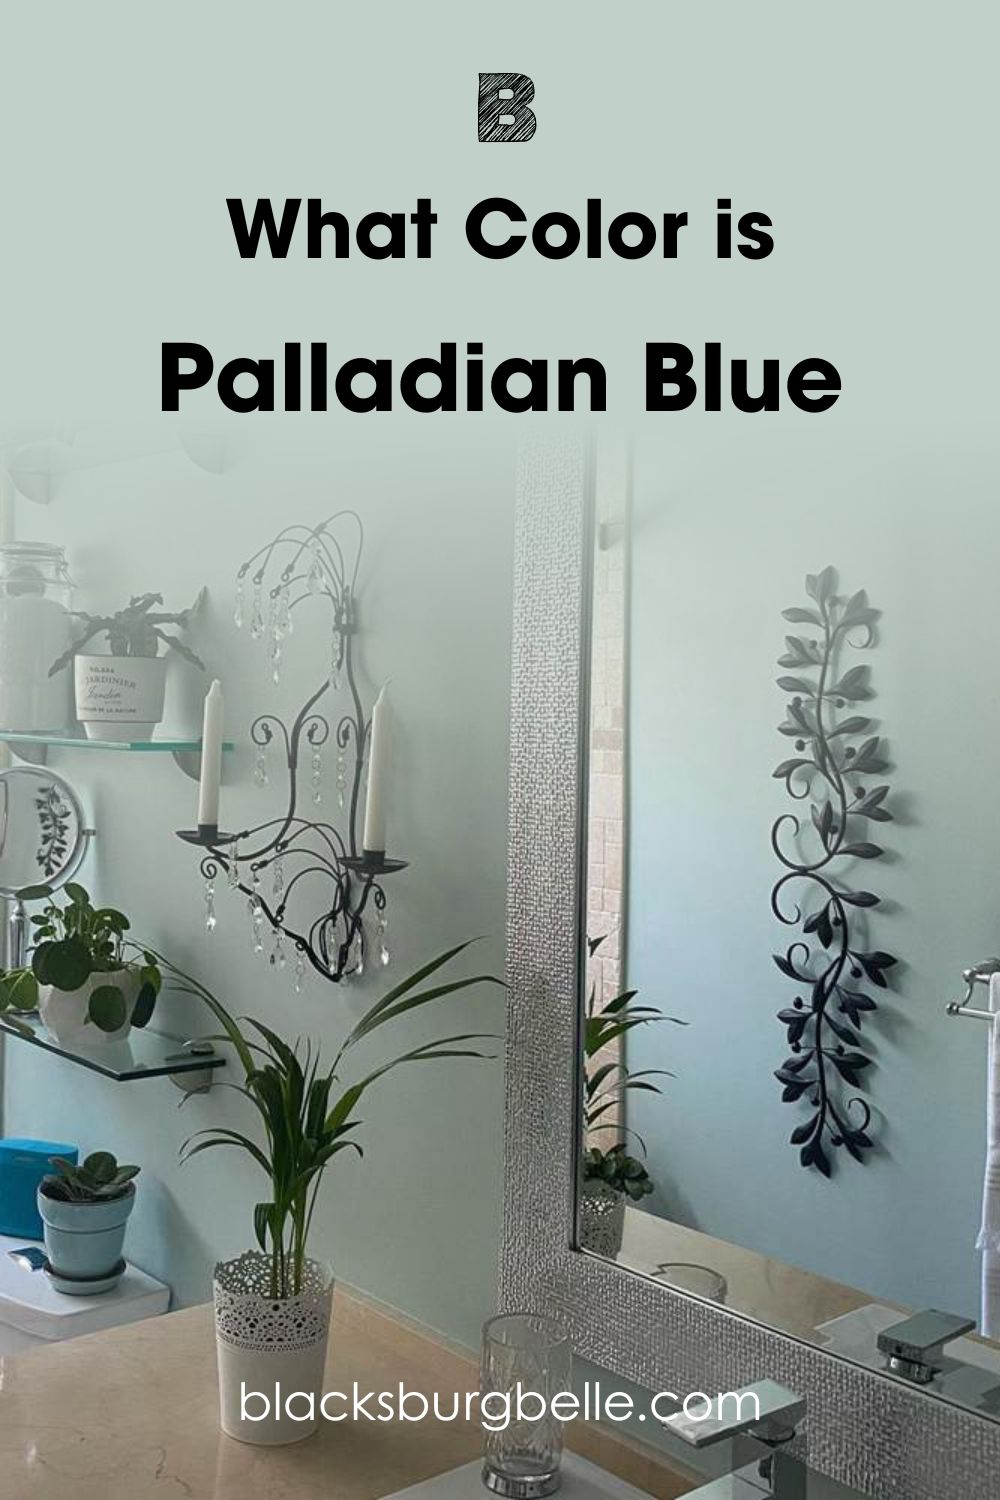 Palladian Blue